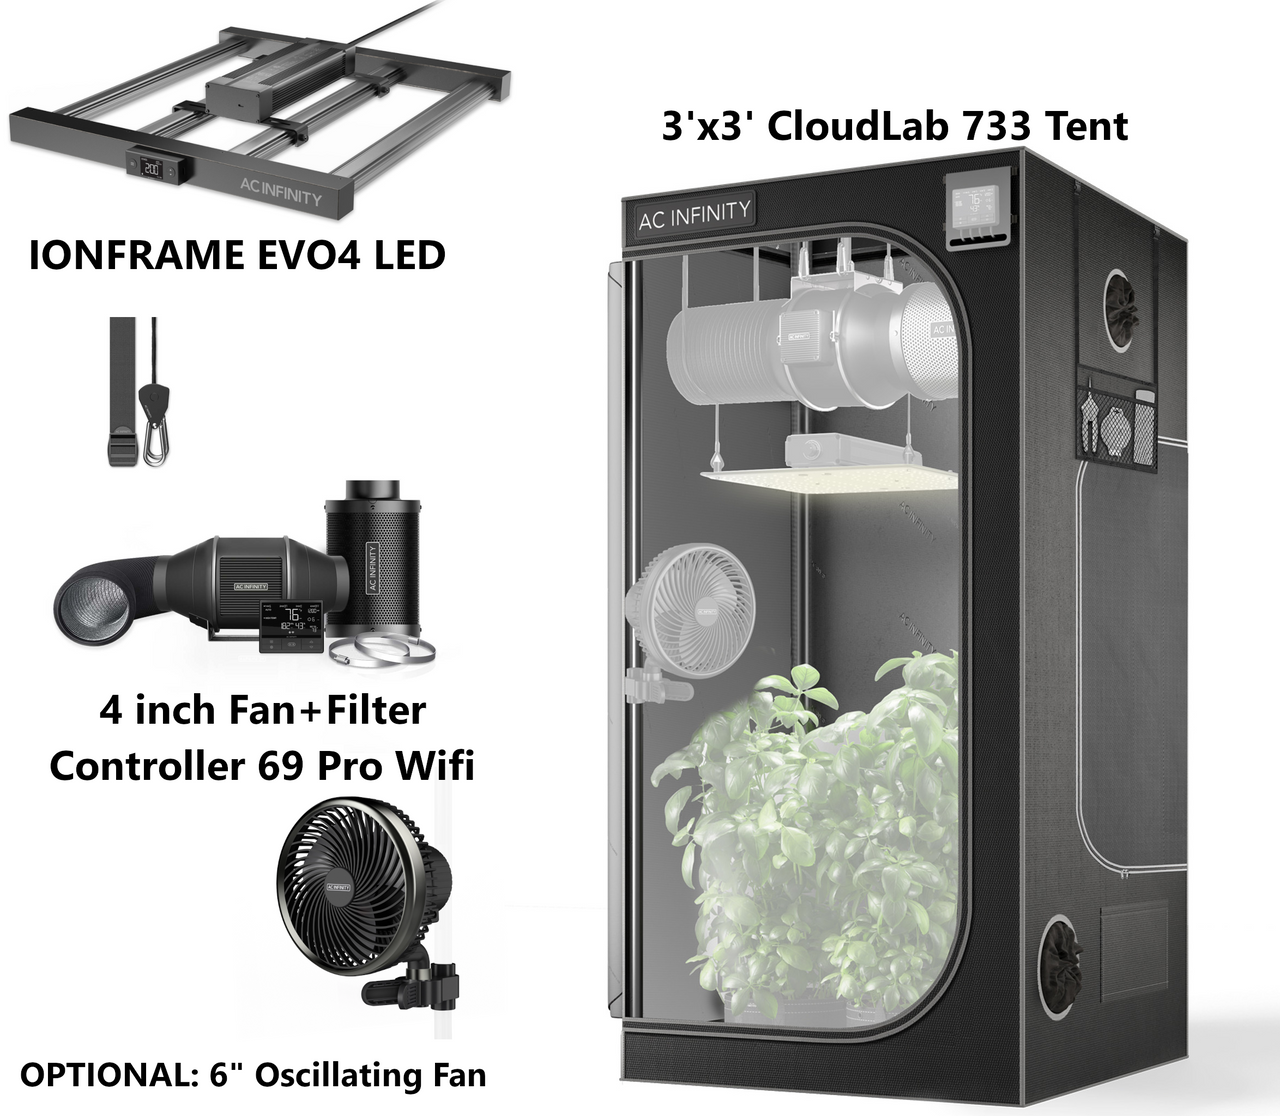 AC Infinity 3' x 3' Grow Tent & Ventilation Kit